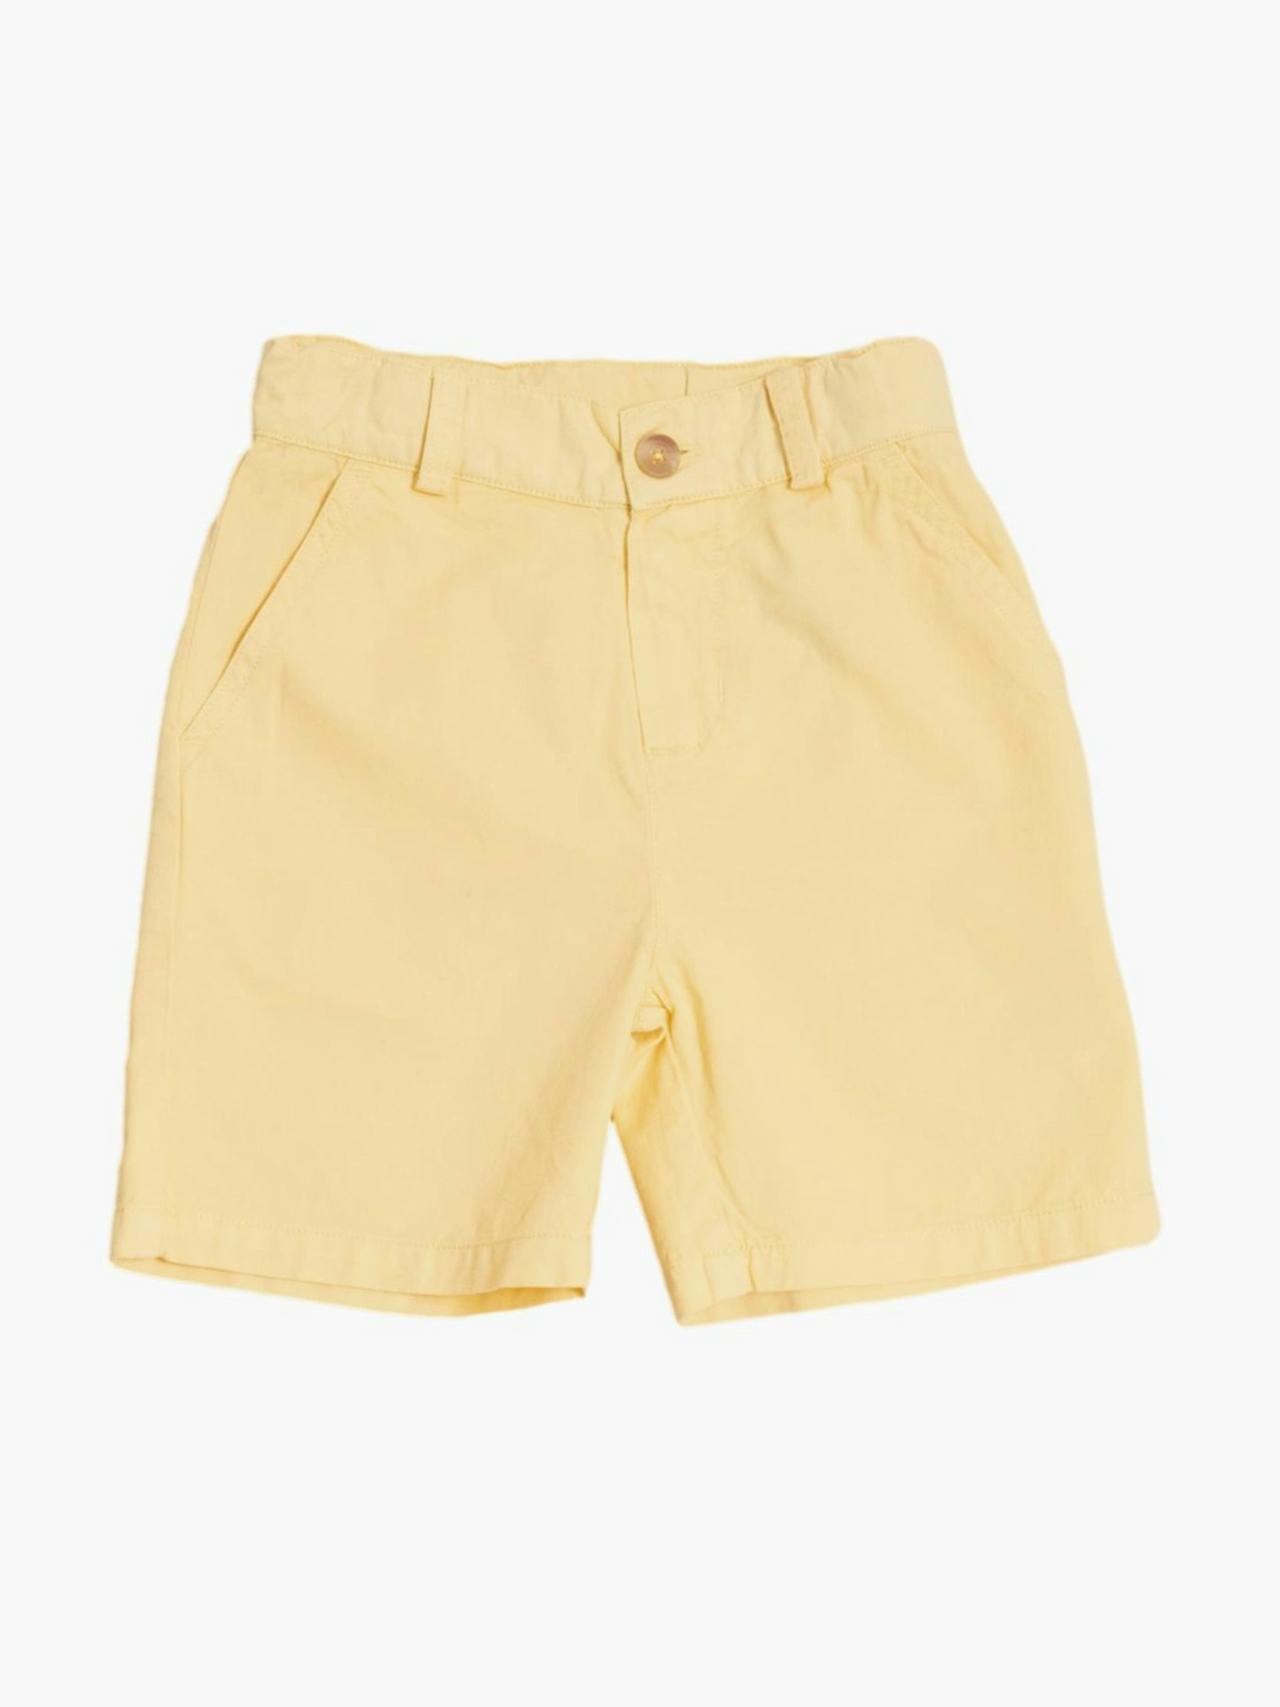 Yellow Edgar shorts